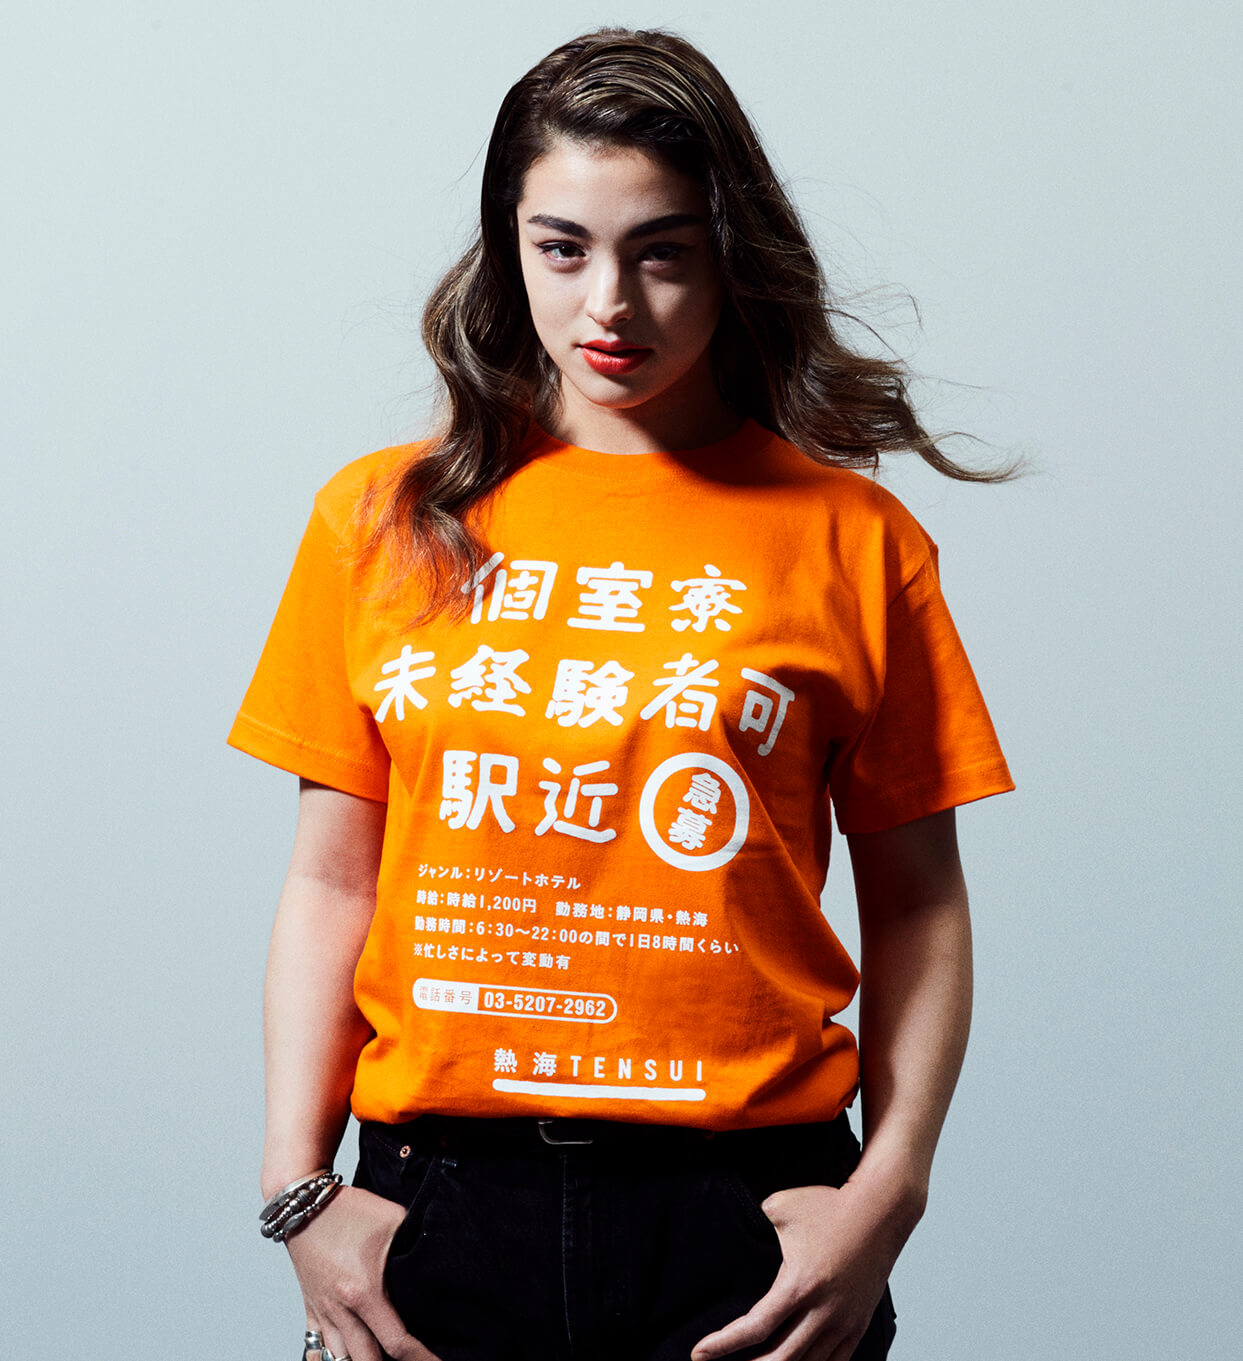 Recruit 求人tシャツ Vol 1 なぜなら外国人は漢字tシャツが好きだから White Life